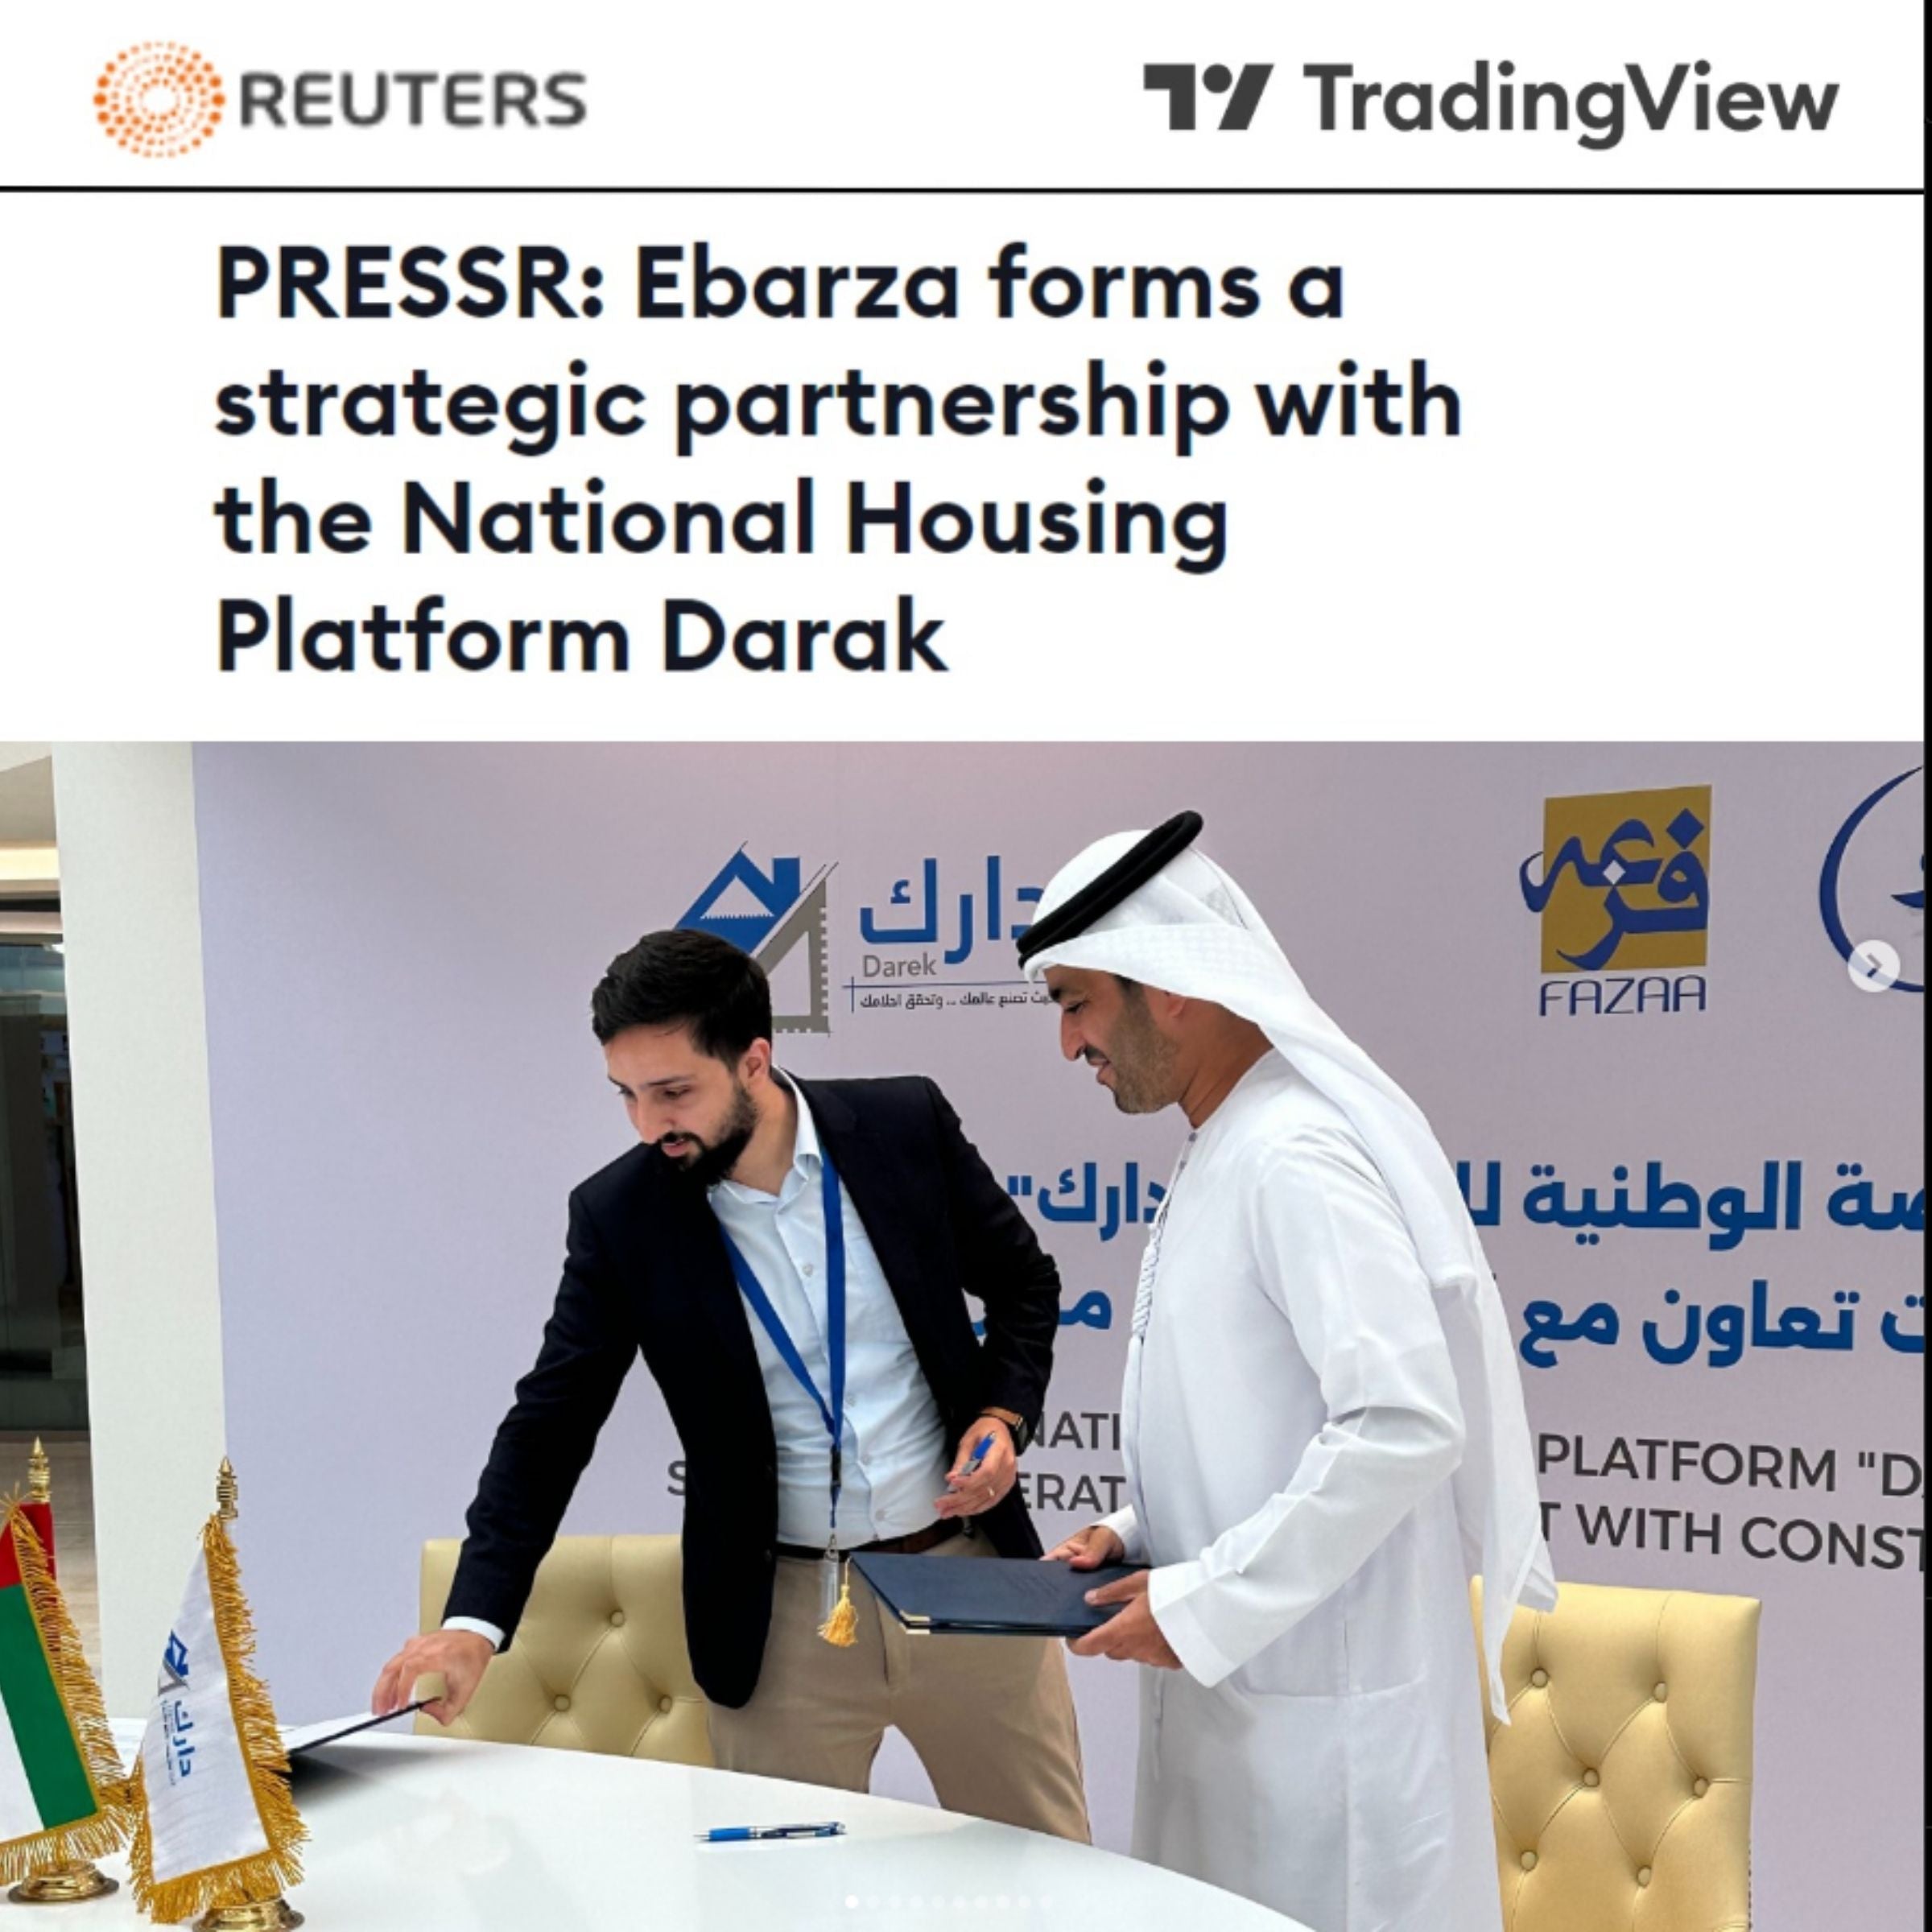 PRESSR: Ebarza forms a strategic partnership with the National Housing Platform Darak